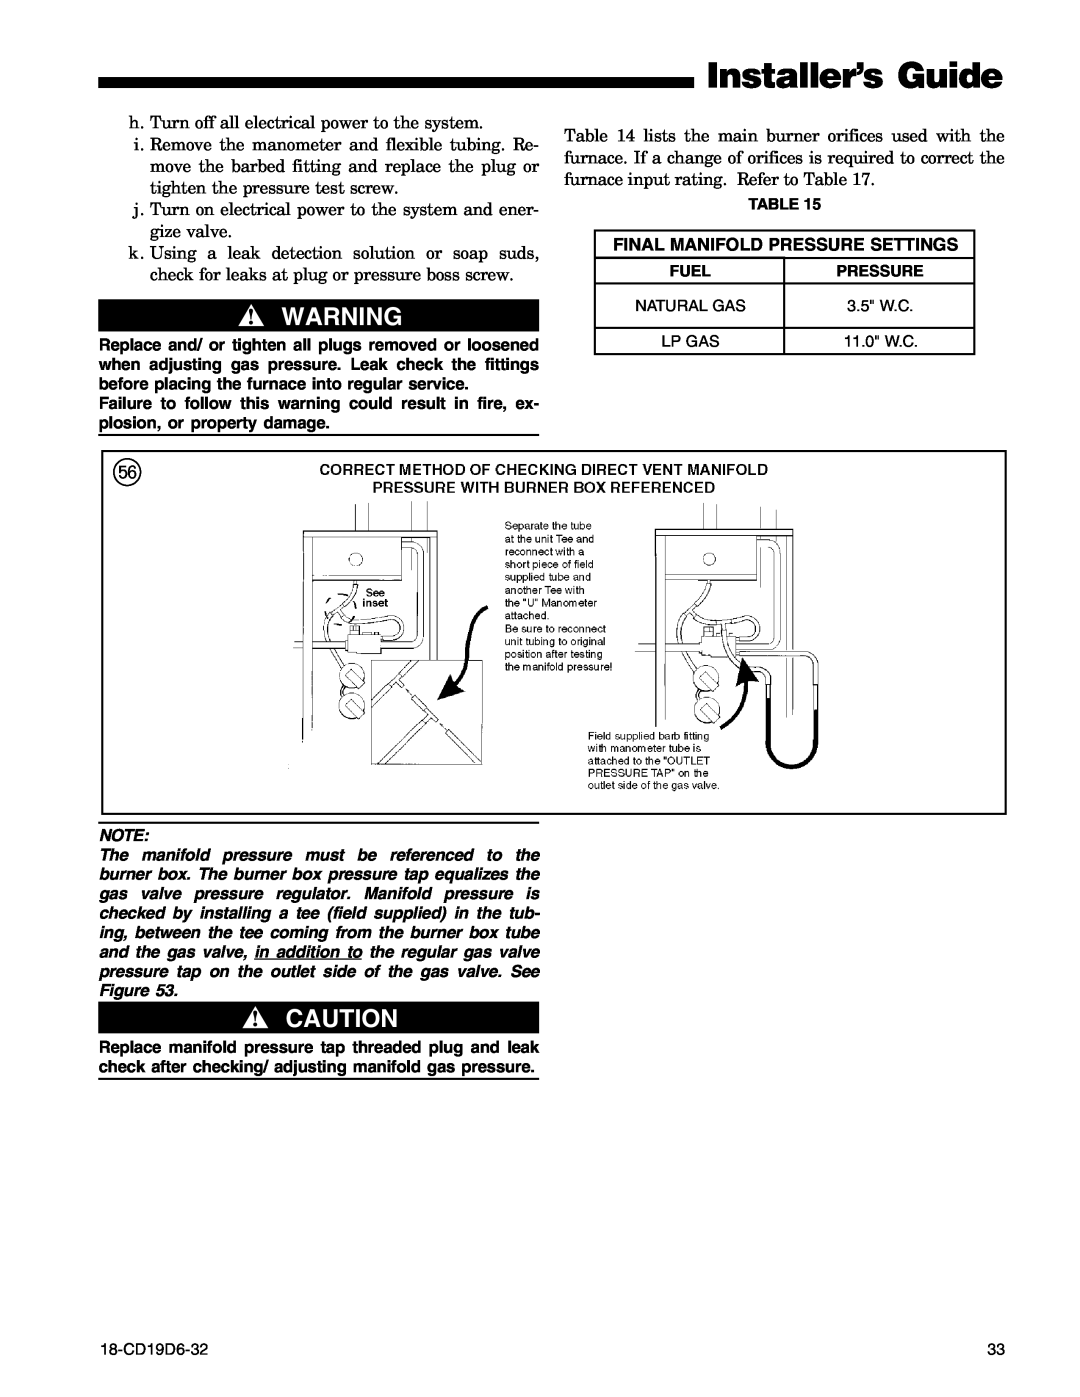 Trane UX1B080A9421A, UX1C100A9481A, UX1C080A9601A, UX1C100A9361A manual Installer’s Guide, Final Manifold Pressure Settings 